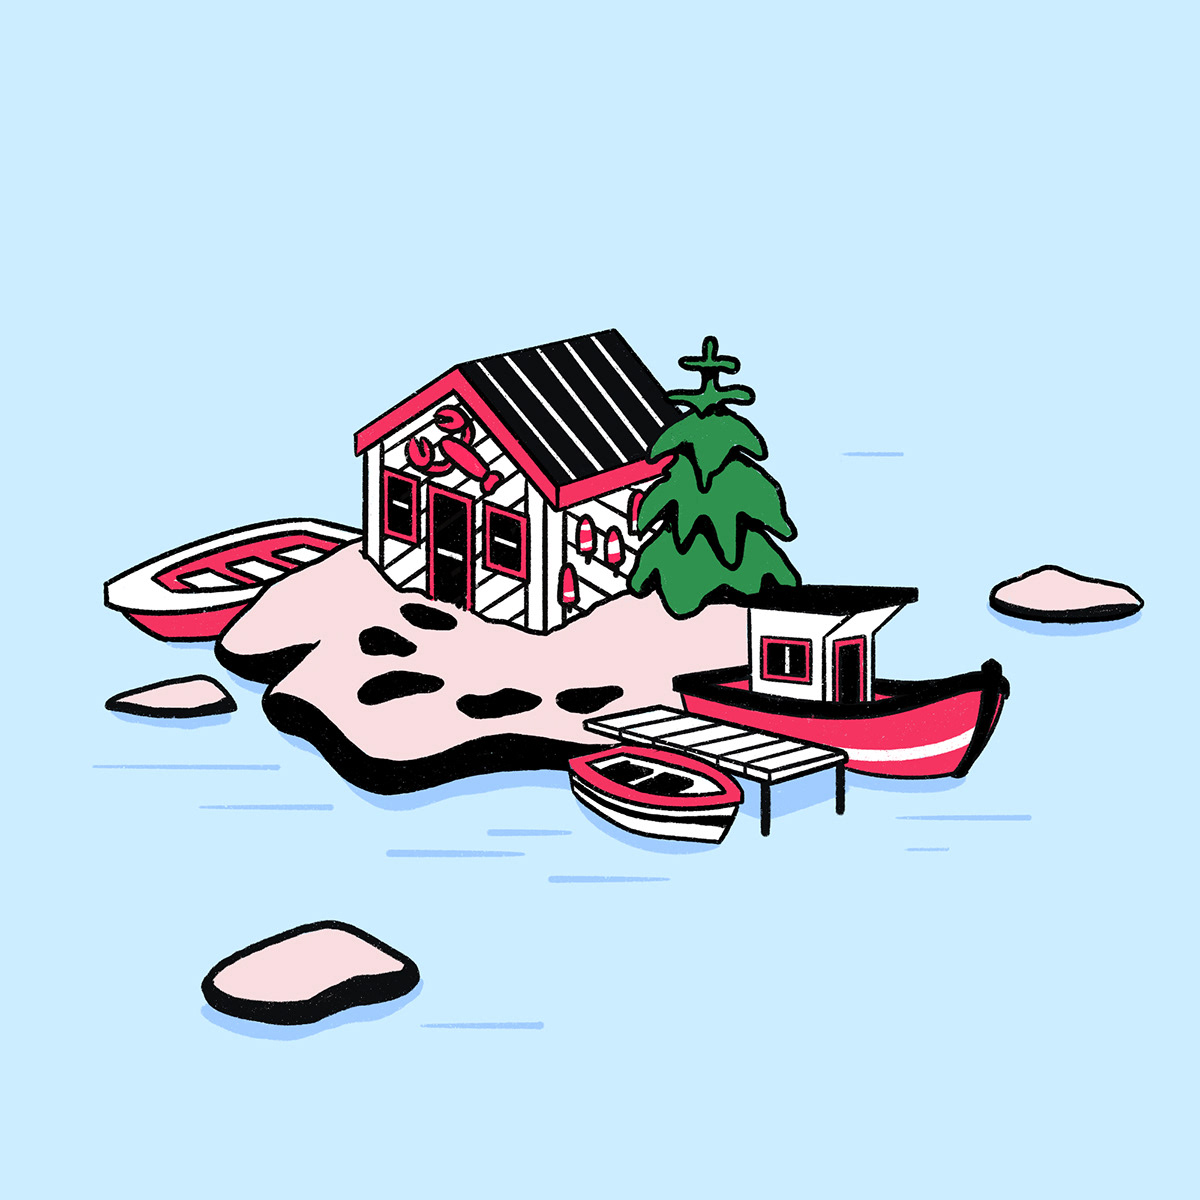 lobster shack on island - illustration